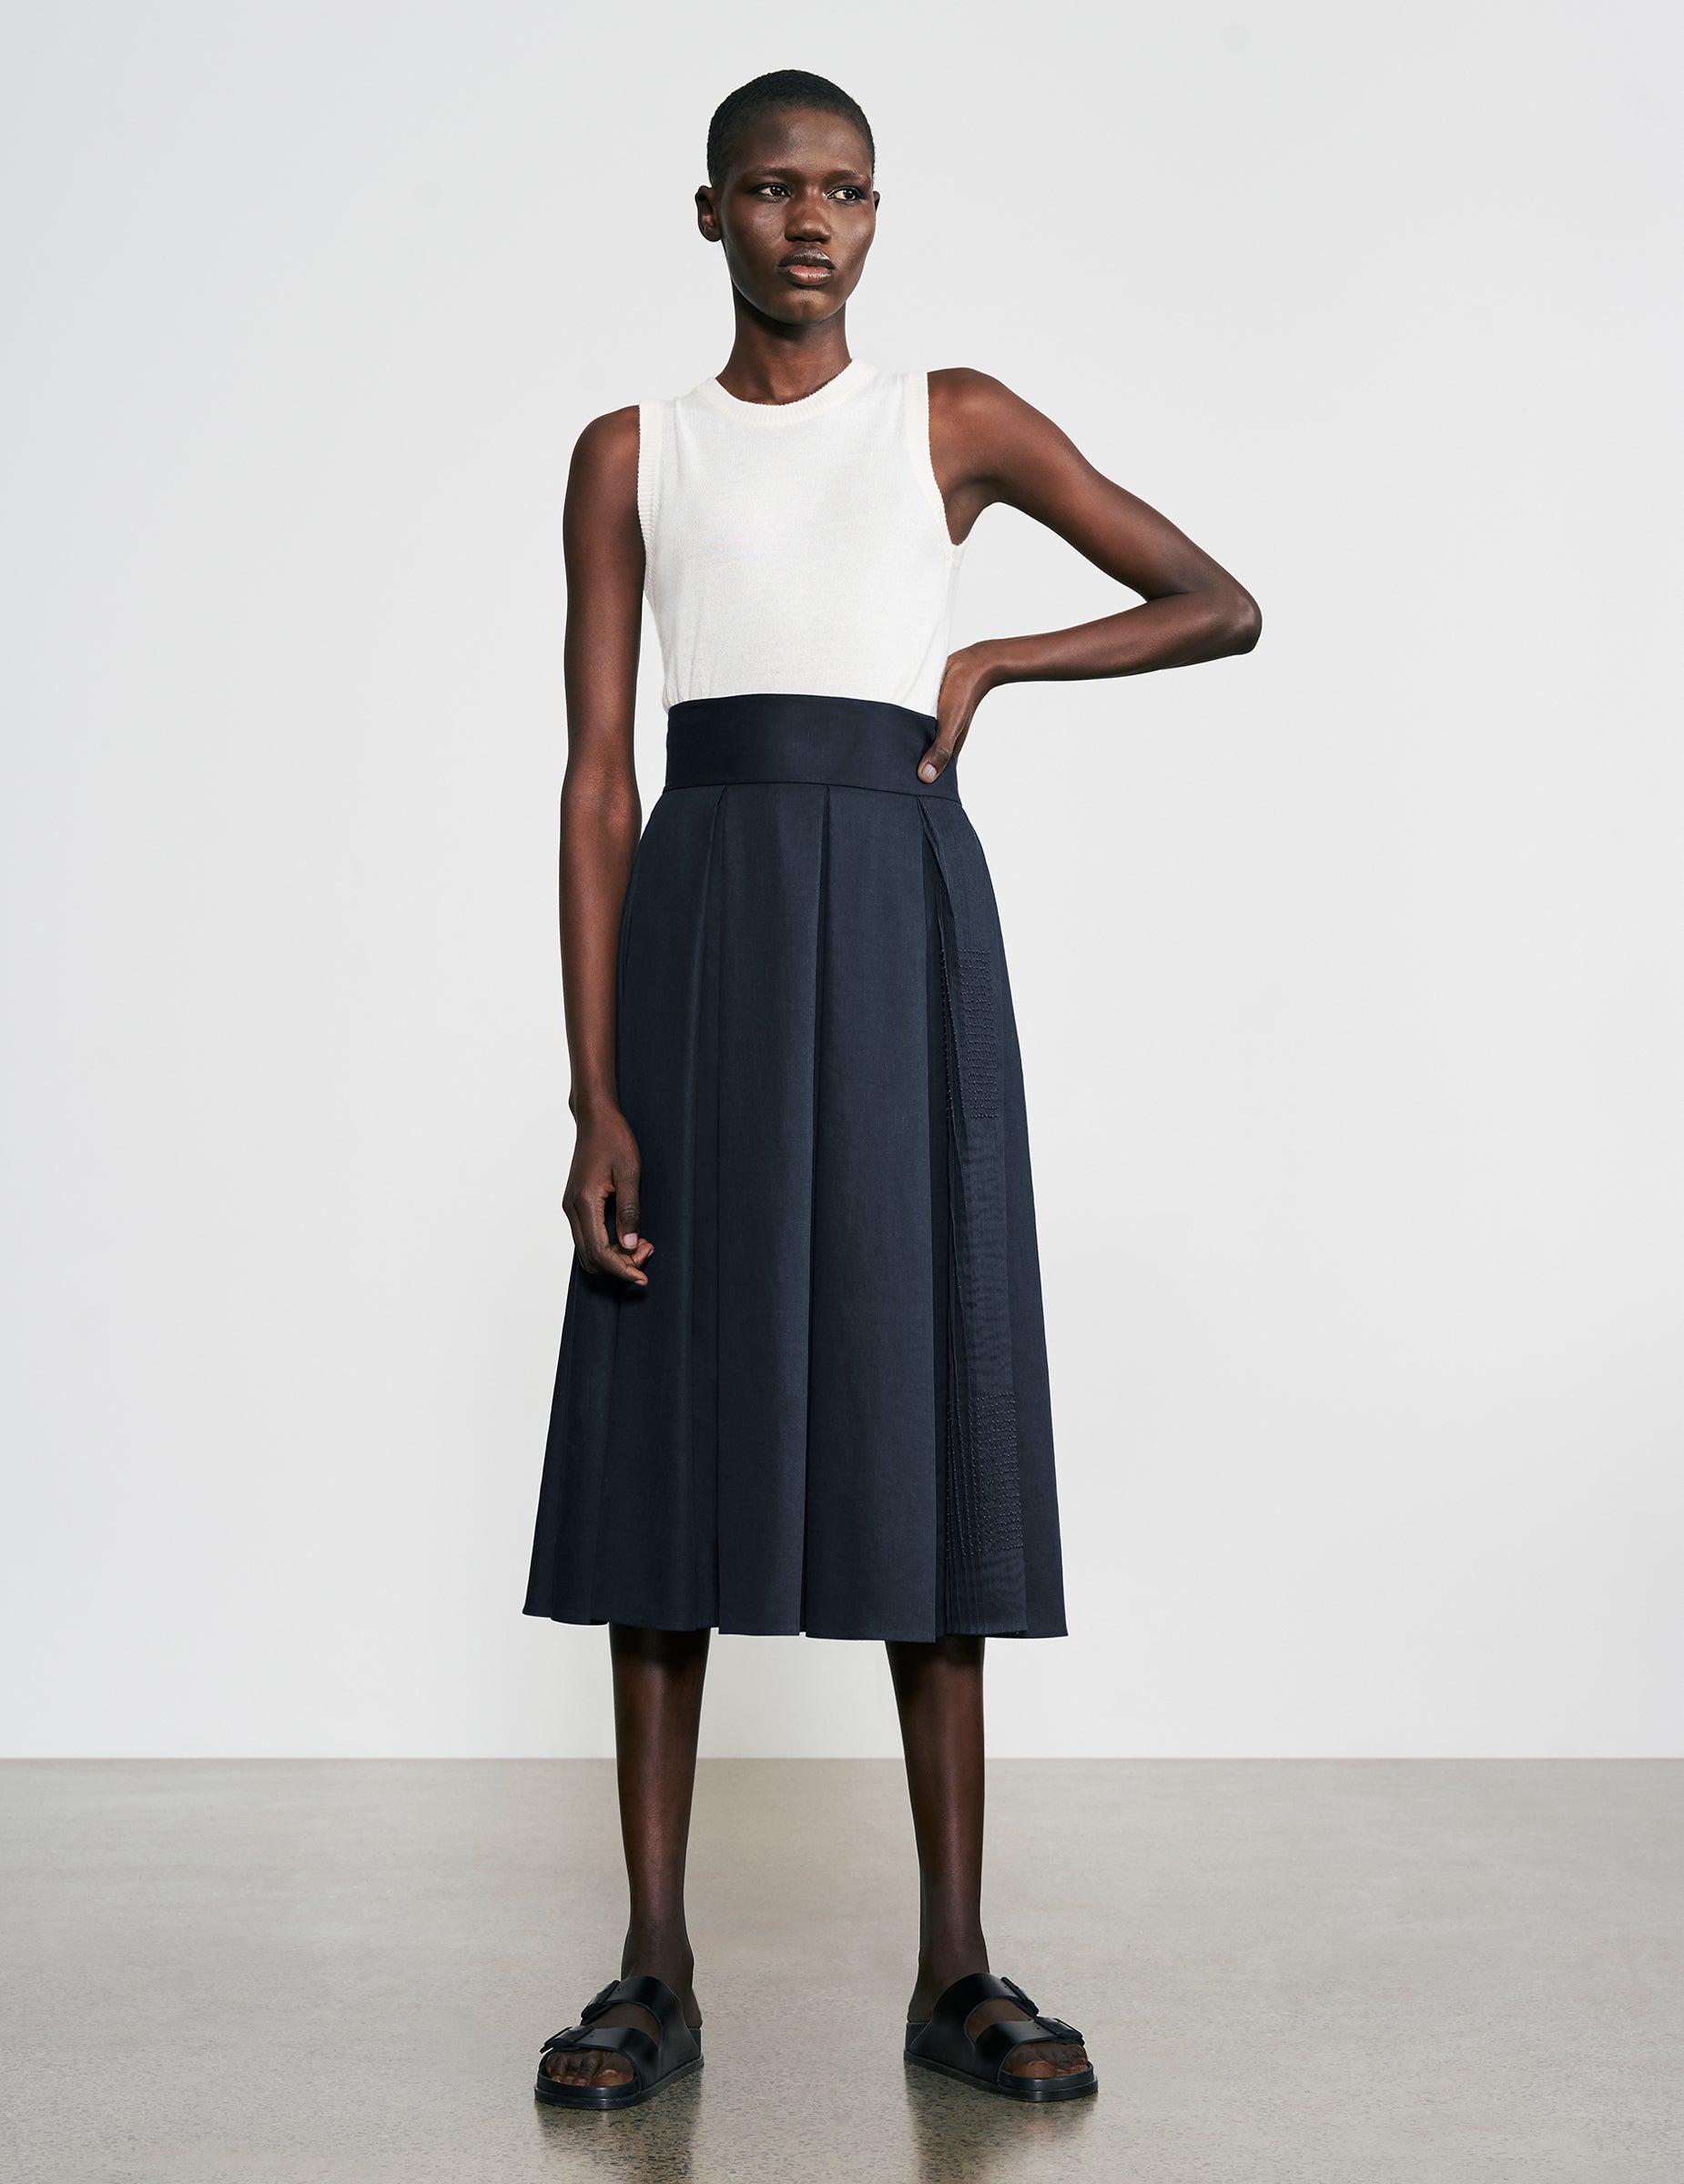 How to Wear a Pleated Midi Skirt for Work - Merrick's Art